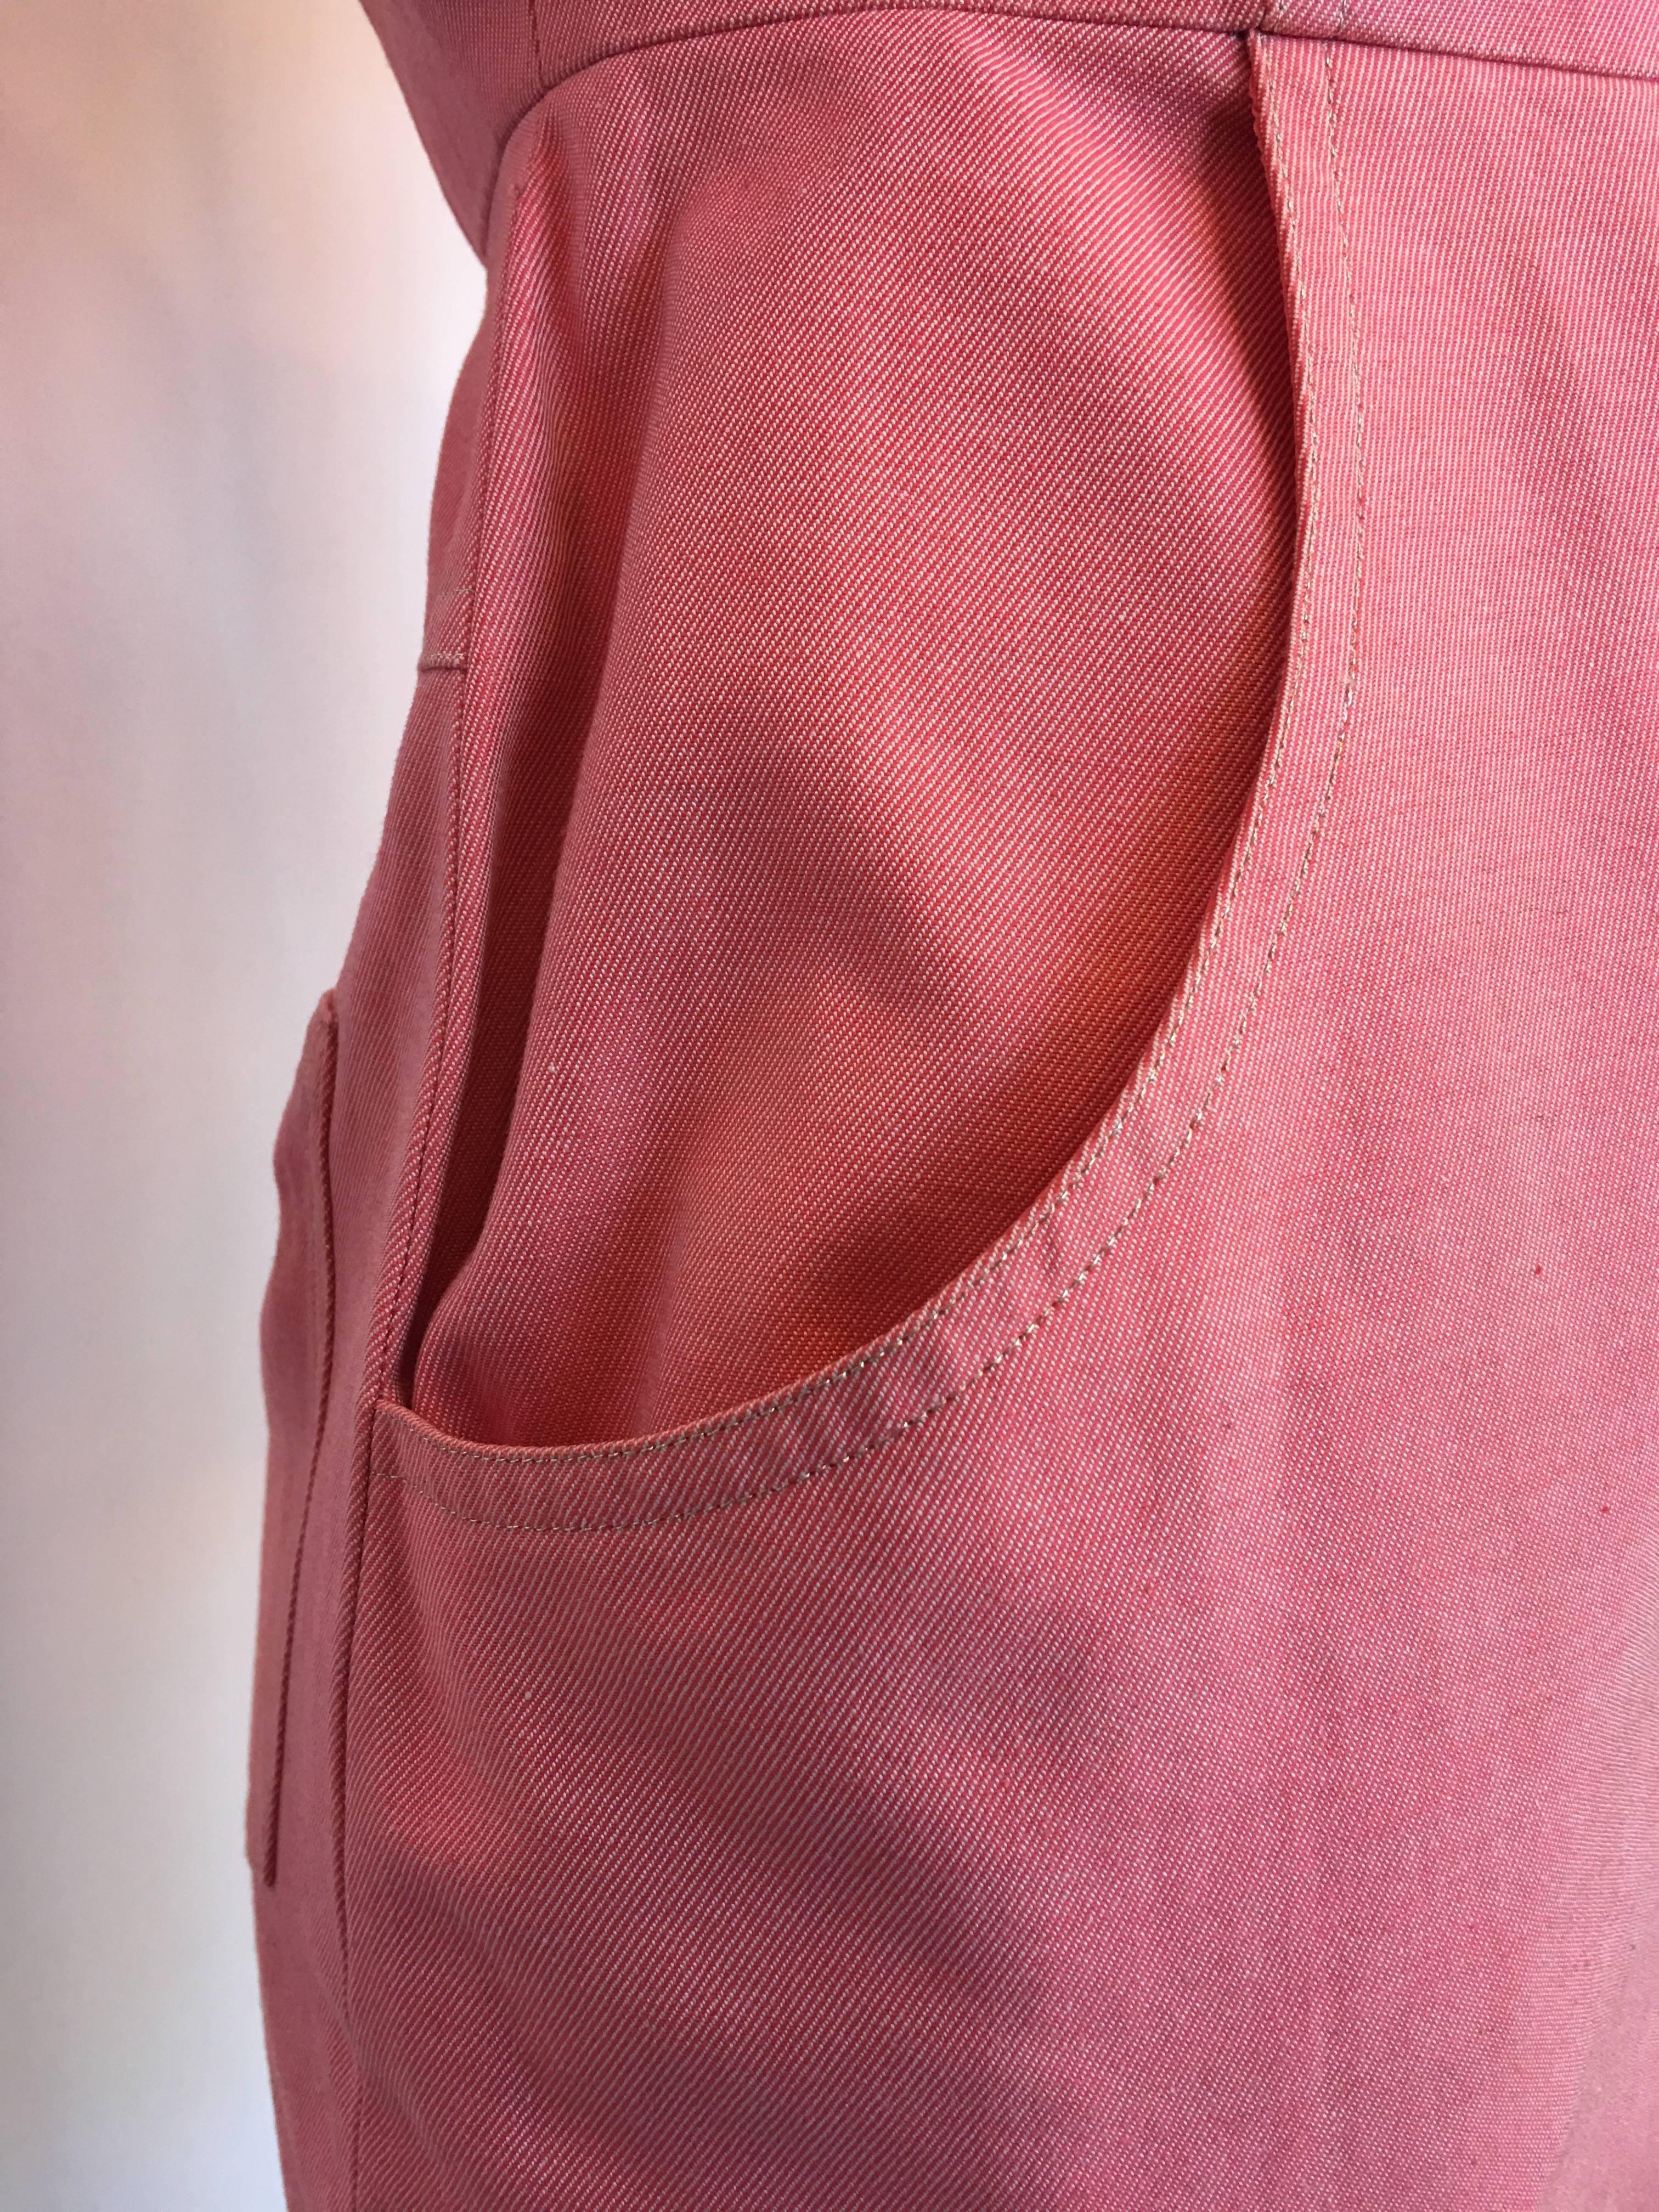 Women's or Men's Bill Blass Salmon Pink Button Up Uniform Suit Dress, 1990s 